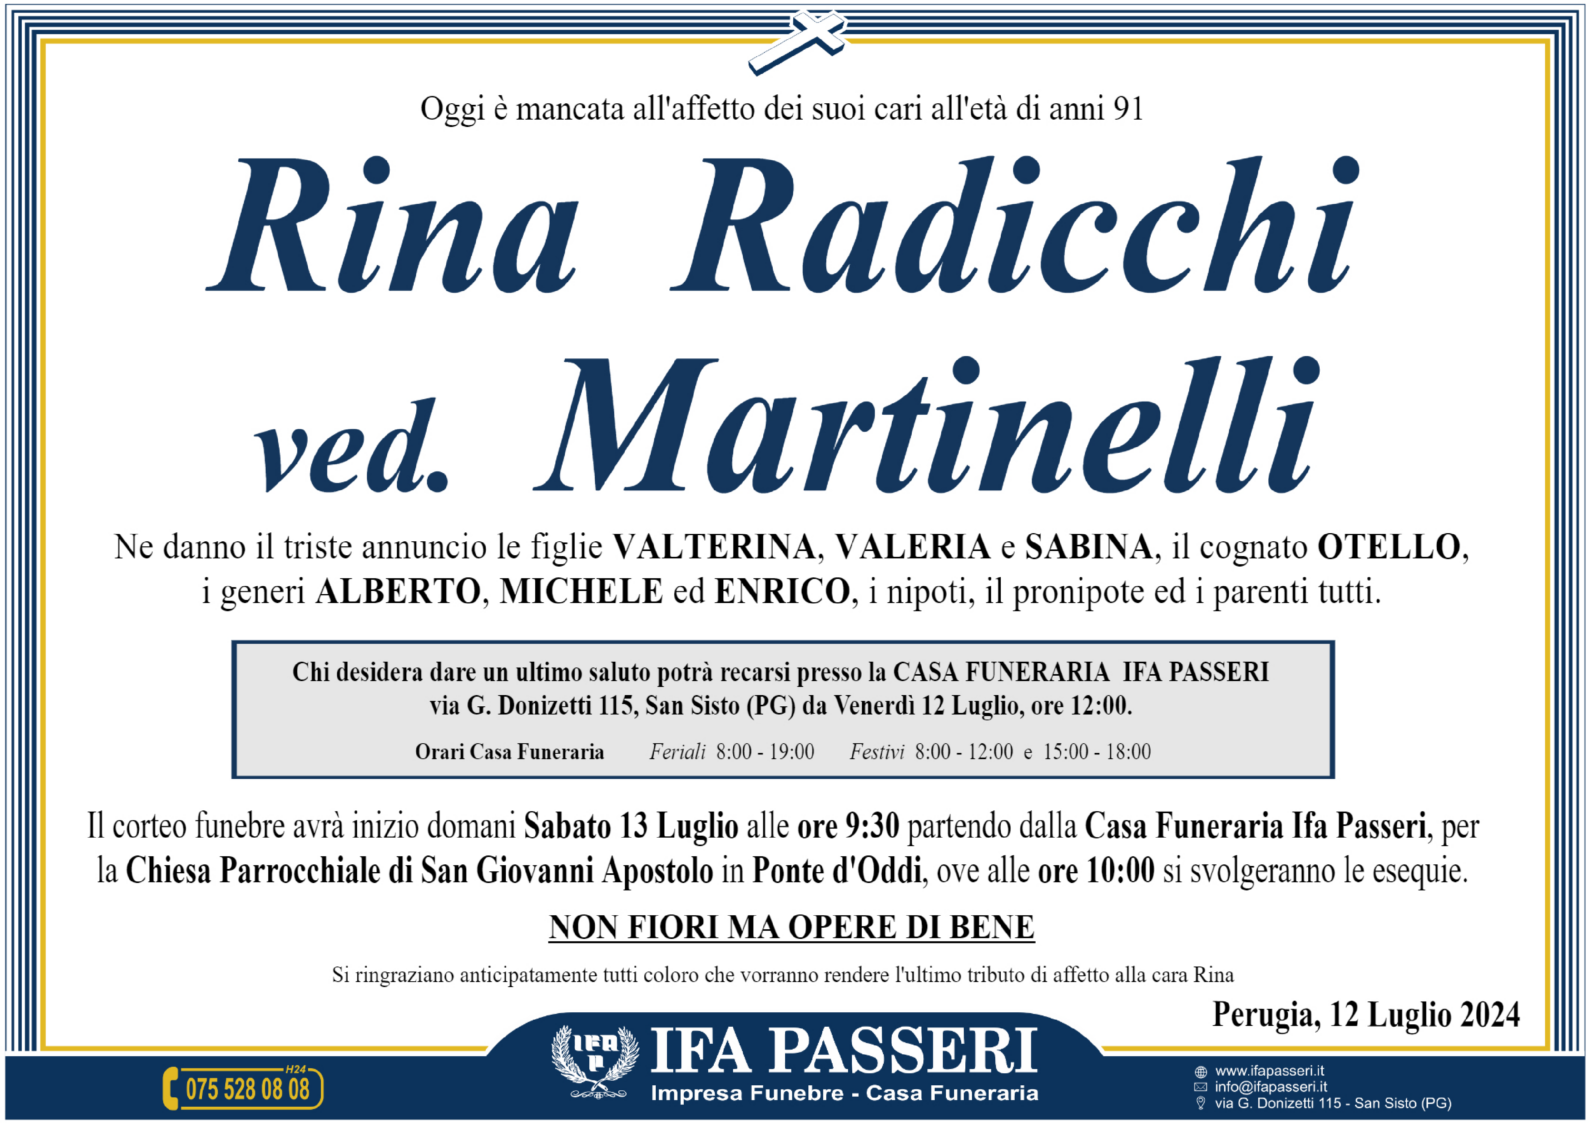 Rina Radicchi ved. Martinelli